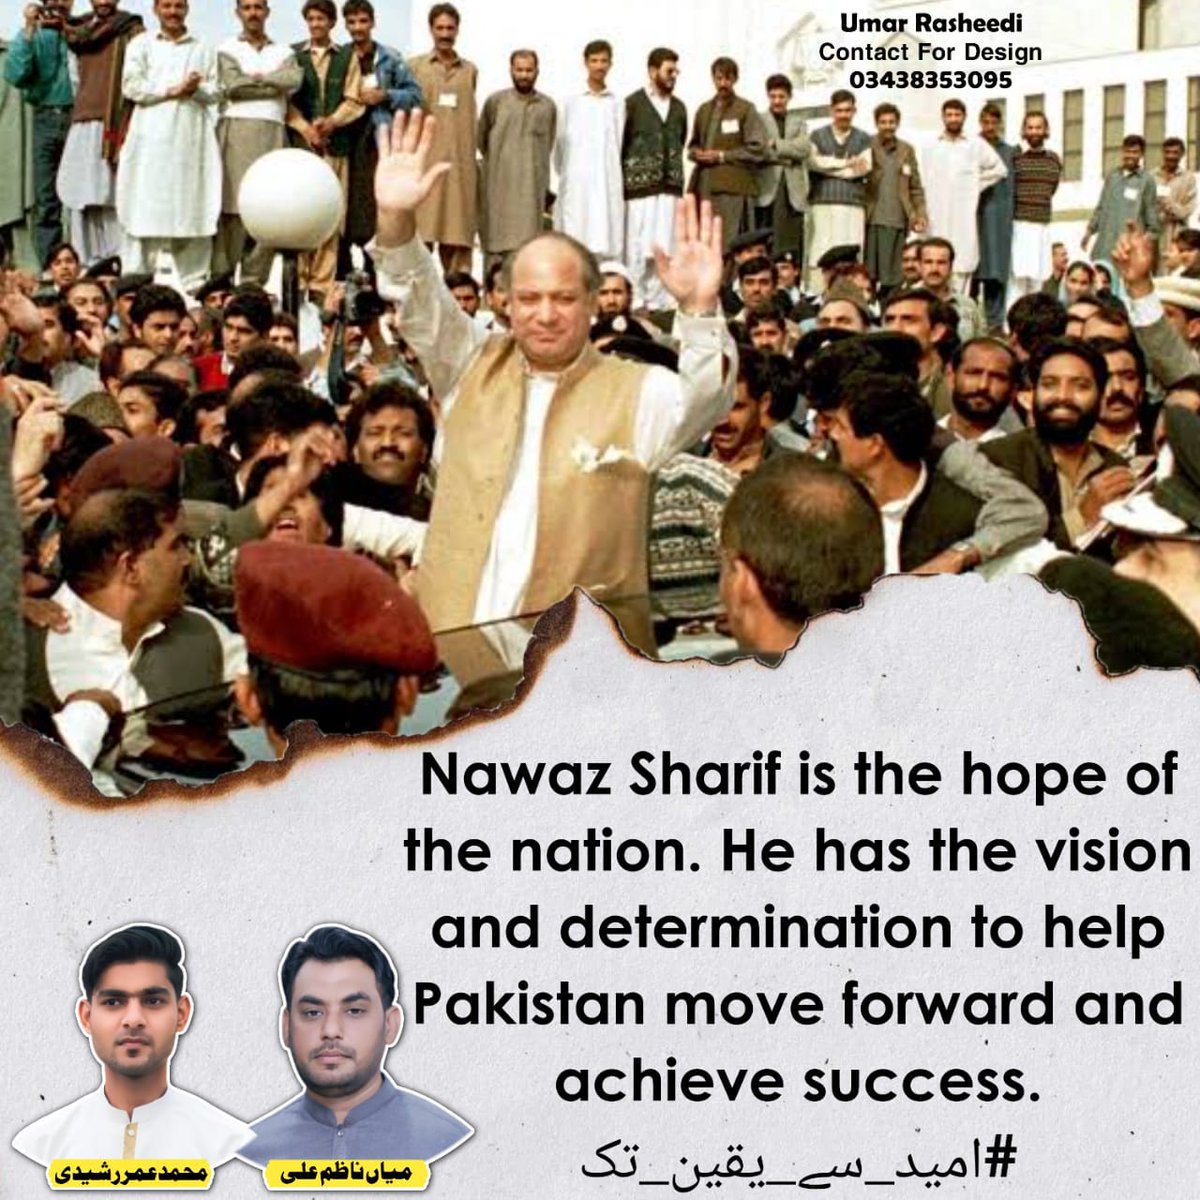 Mian Muhammad Nawaz Sharif was the hope of the nation .He Has The Vision And Determination to Help Pakistan Move Forward and Success.
 #رہبر_ہمارا_نوازشریف
#SMT_Burewala 
@TararAttaullah @MaryamNSharif 
@Atifrauf79